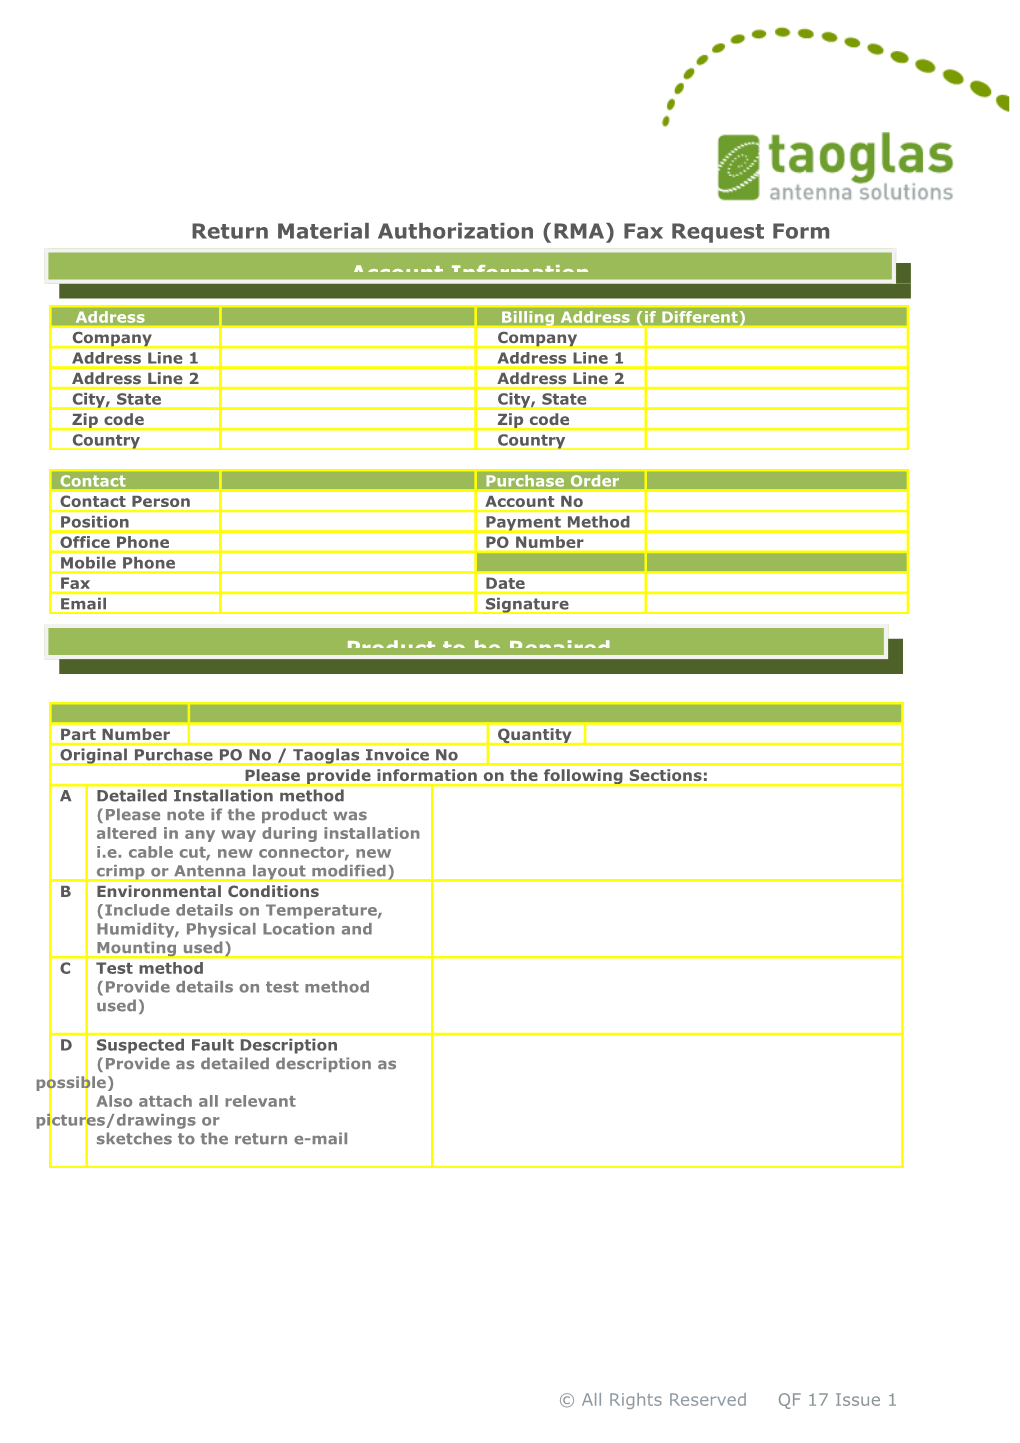 Return Material Authorization (RMA) Fax Request Form